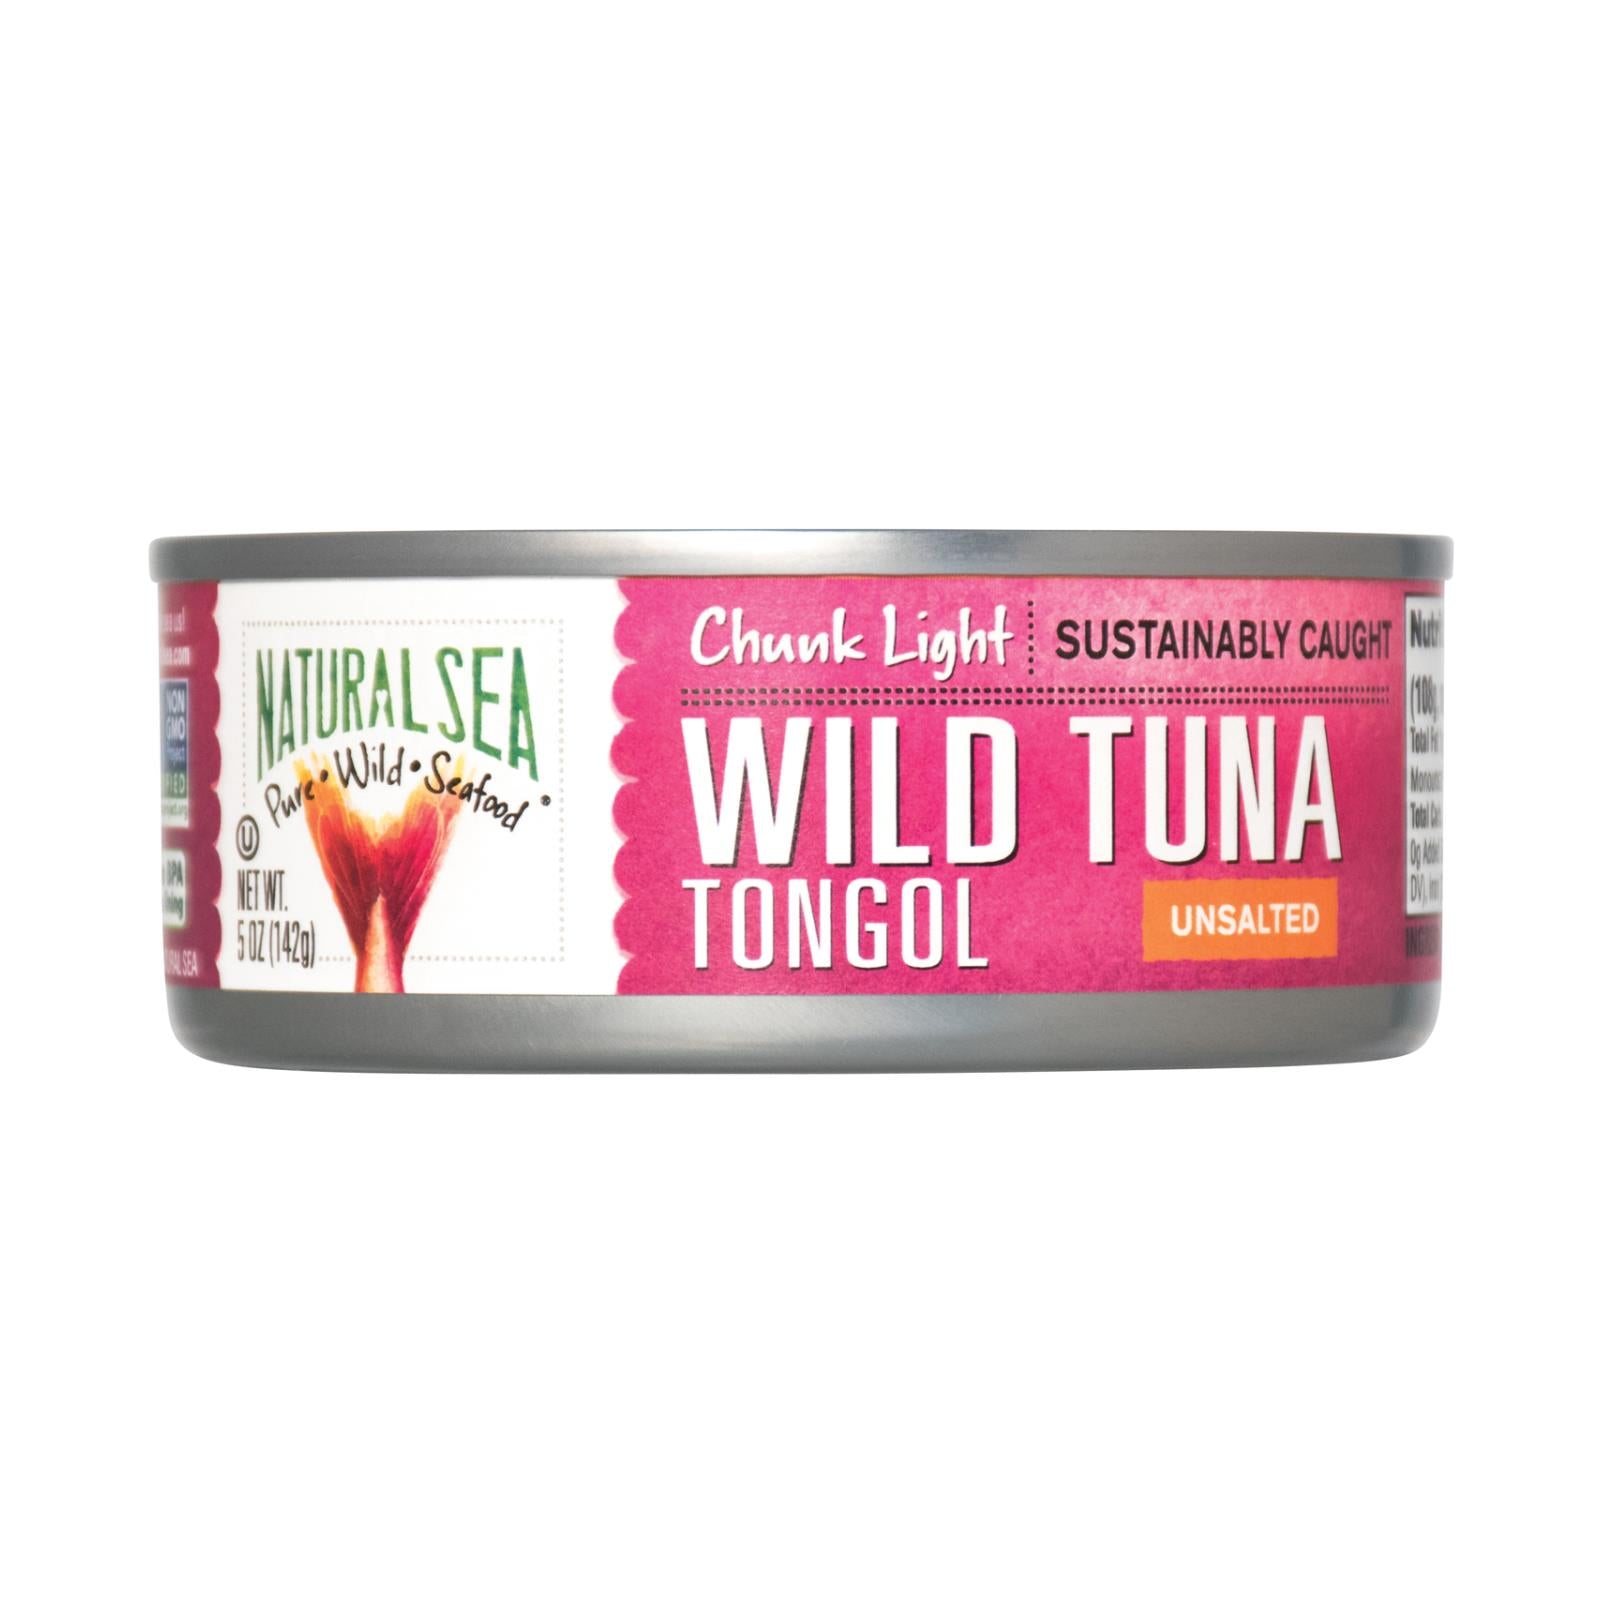 Natural Sea Wild Tongol Tuna, Unsalted, Chunk Light - Case Of 12 - 5 Oz